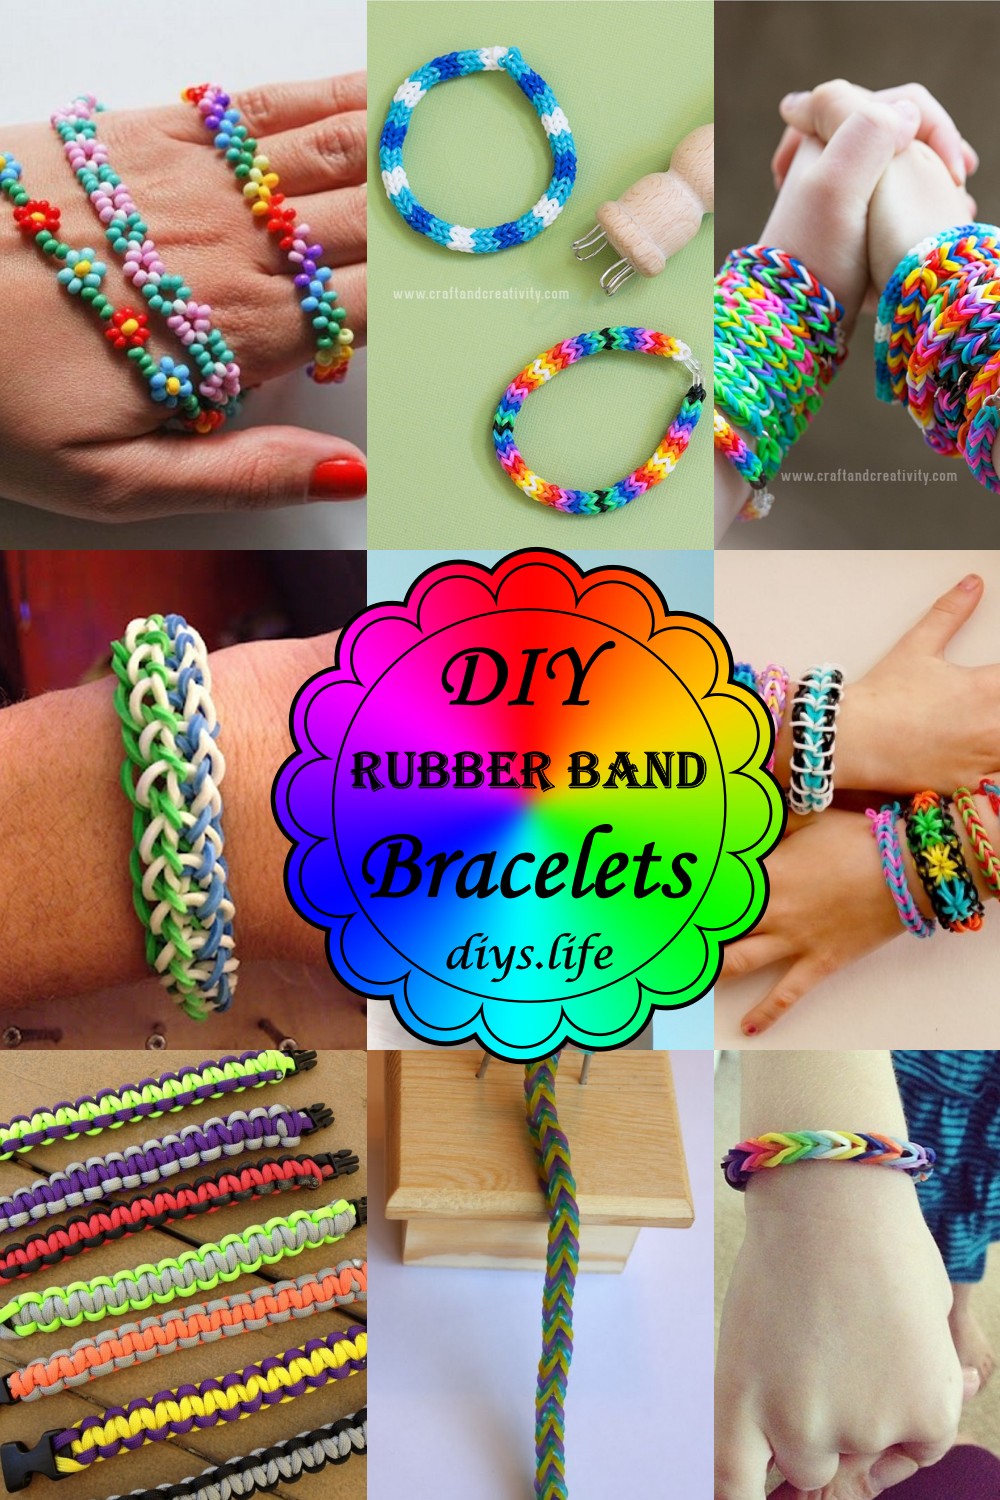 How to Make Rubber Band Bracelets : 6 Steps - Instructables